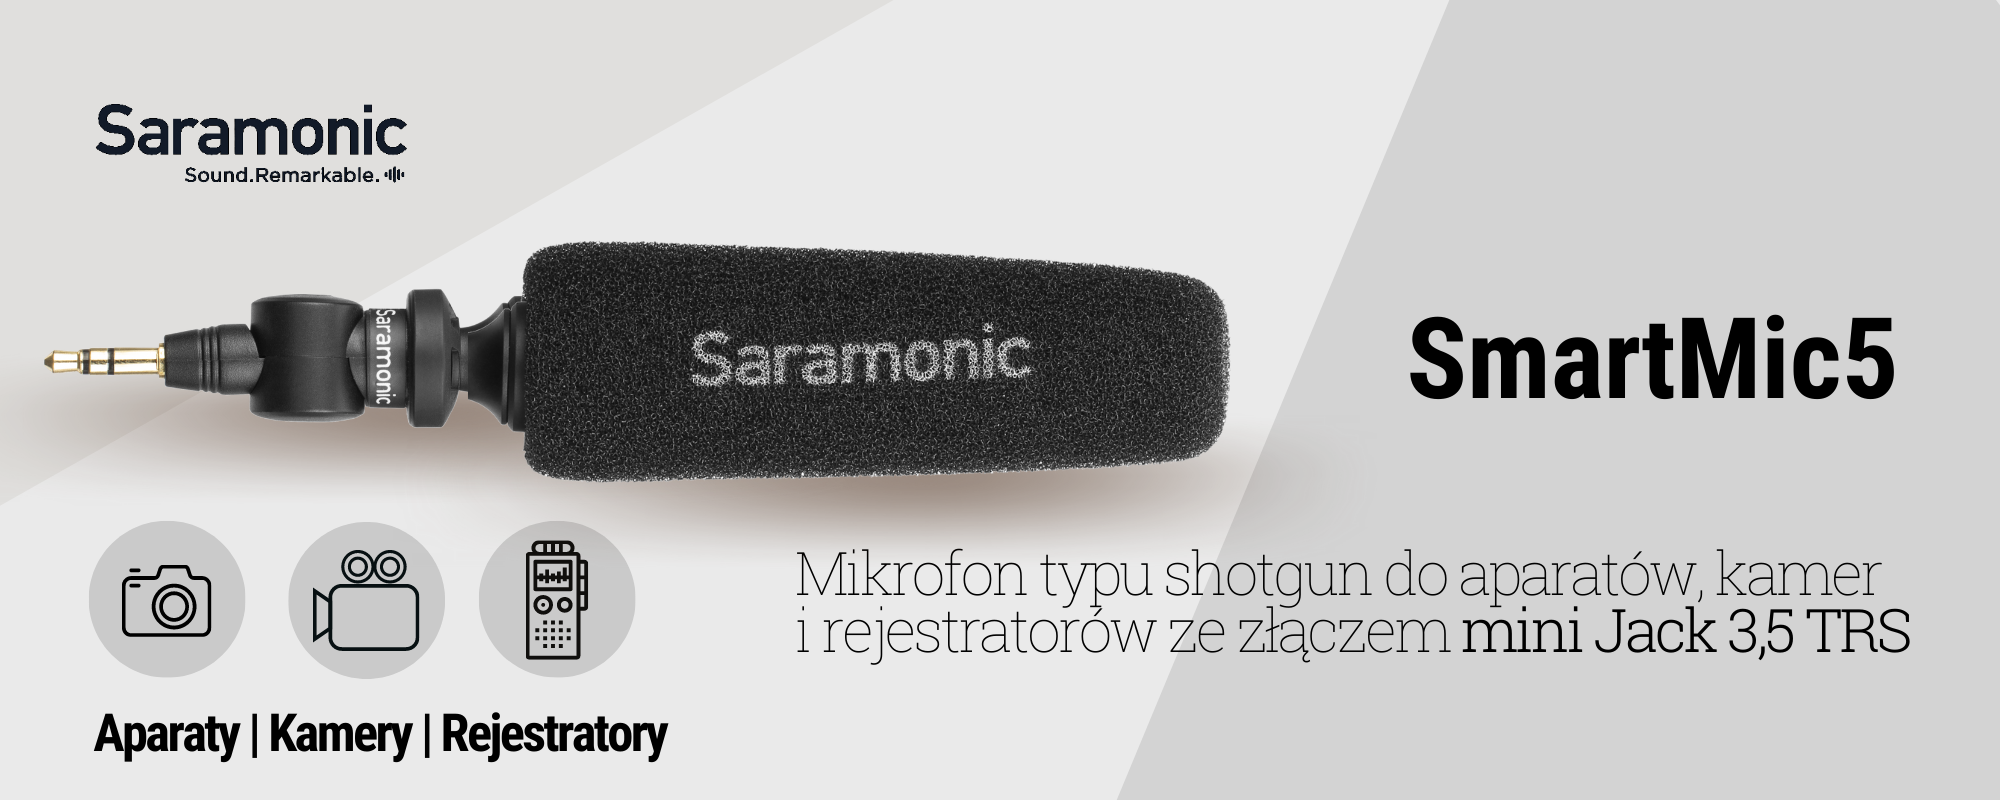 Mikrofon typu shotgunc Saramonic SmartMic5 dla aparatów i kamer